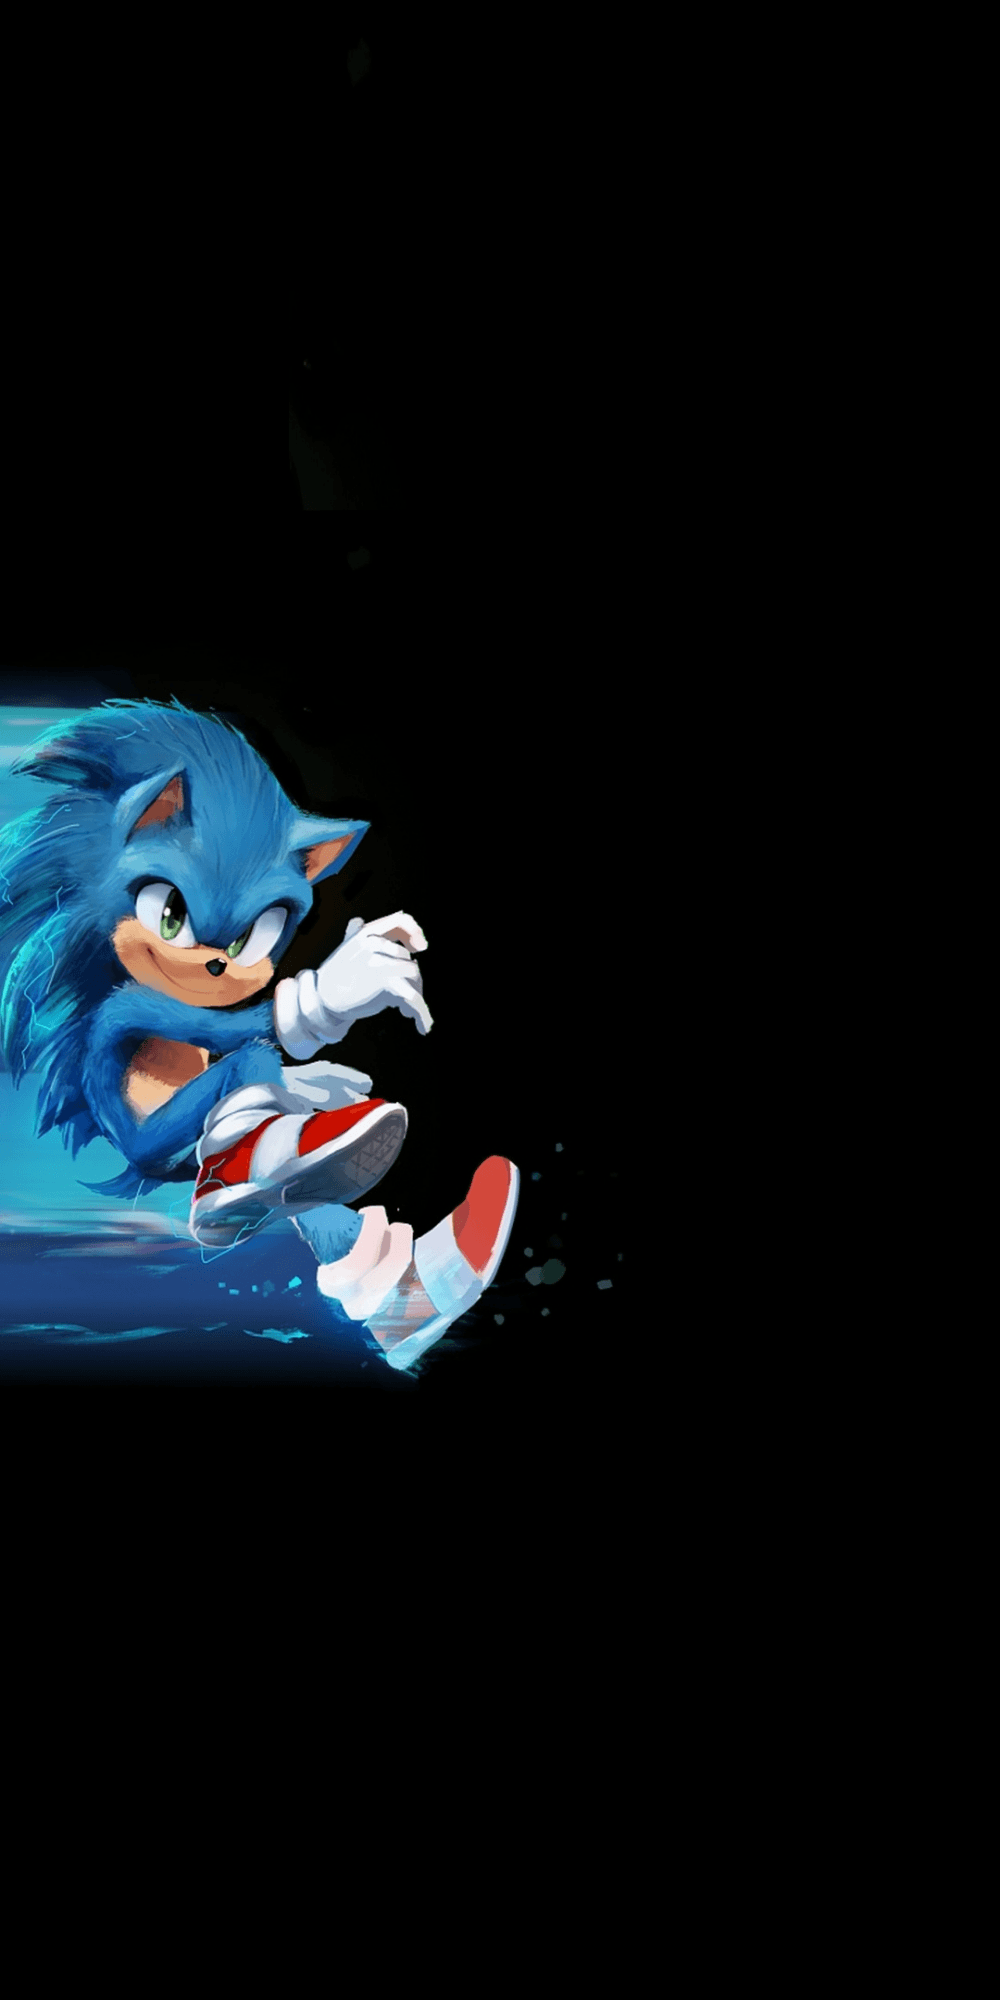 Sonic the Hedgehog, 2020 movie, art wallpaper. Gaming